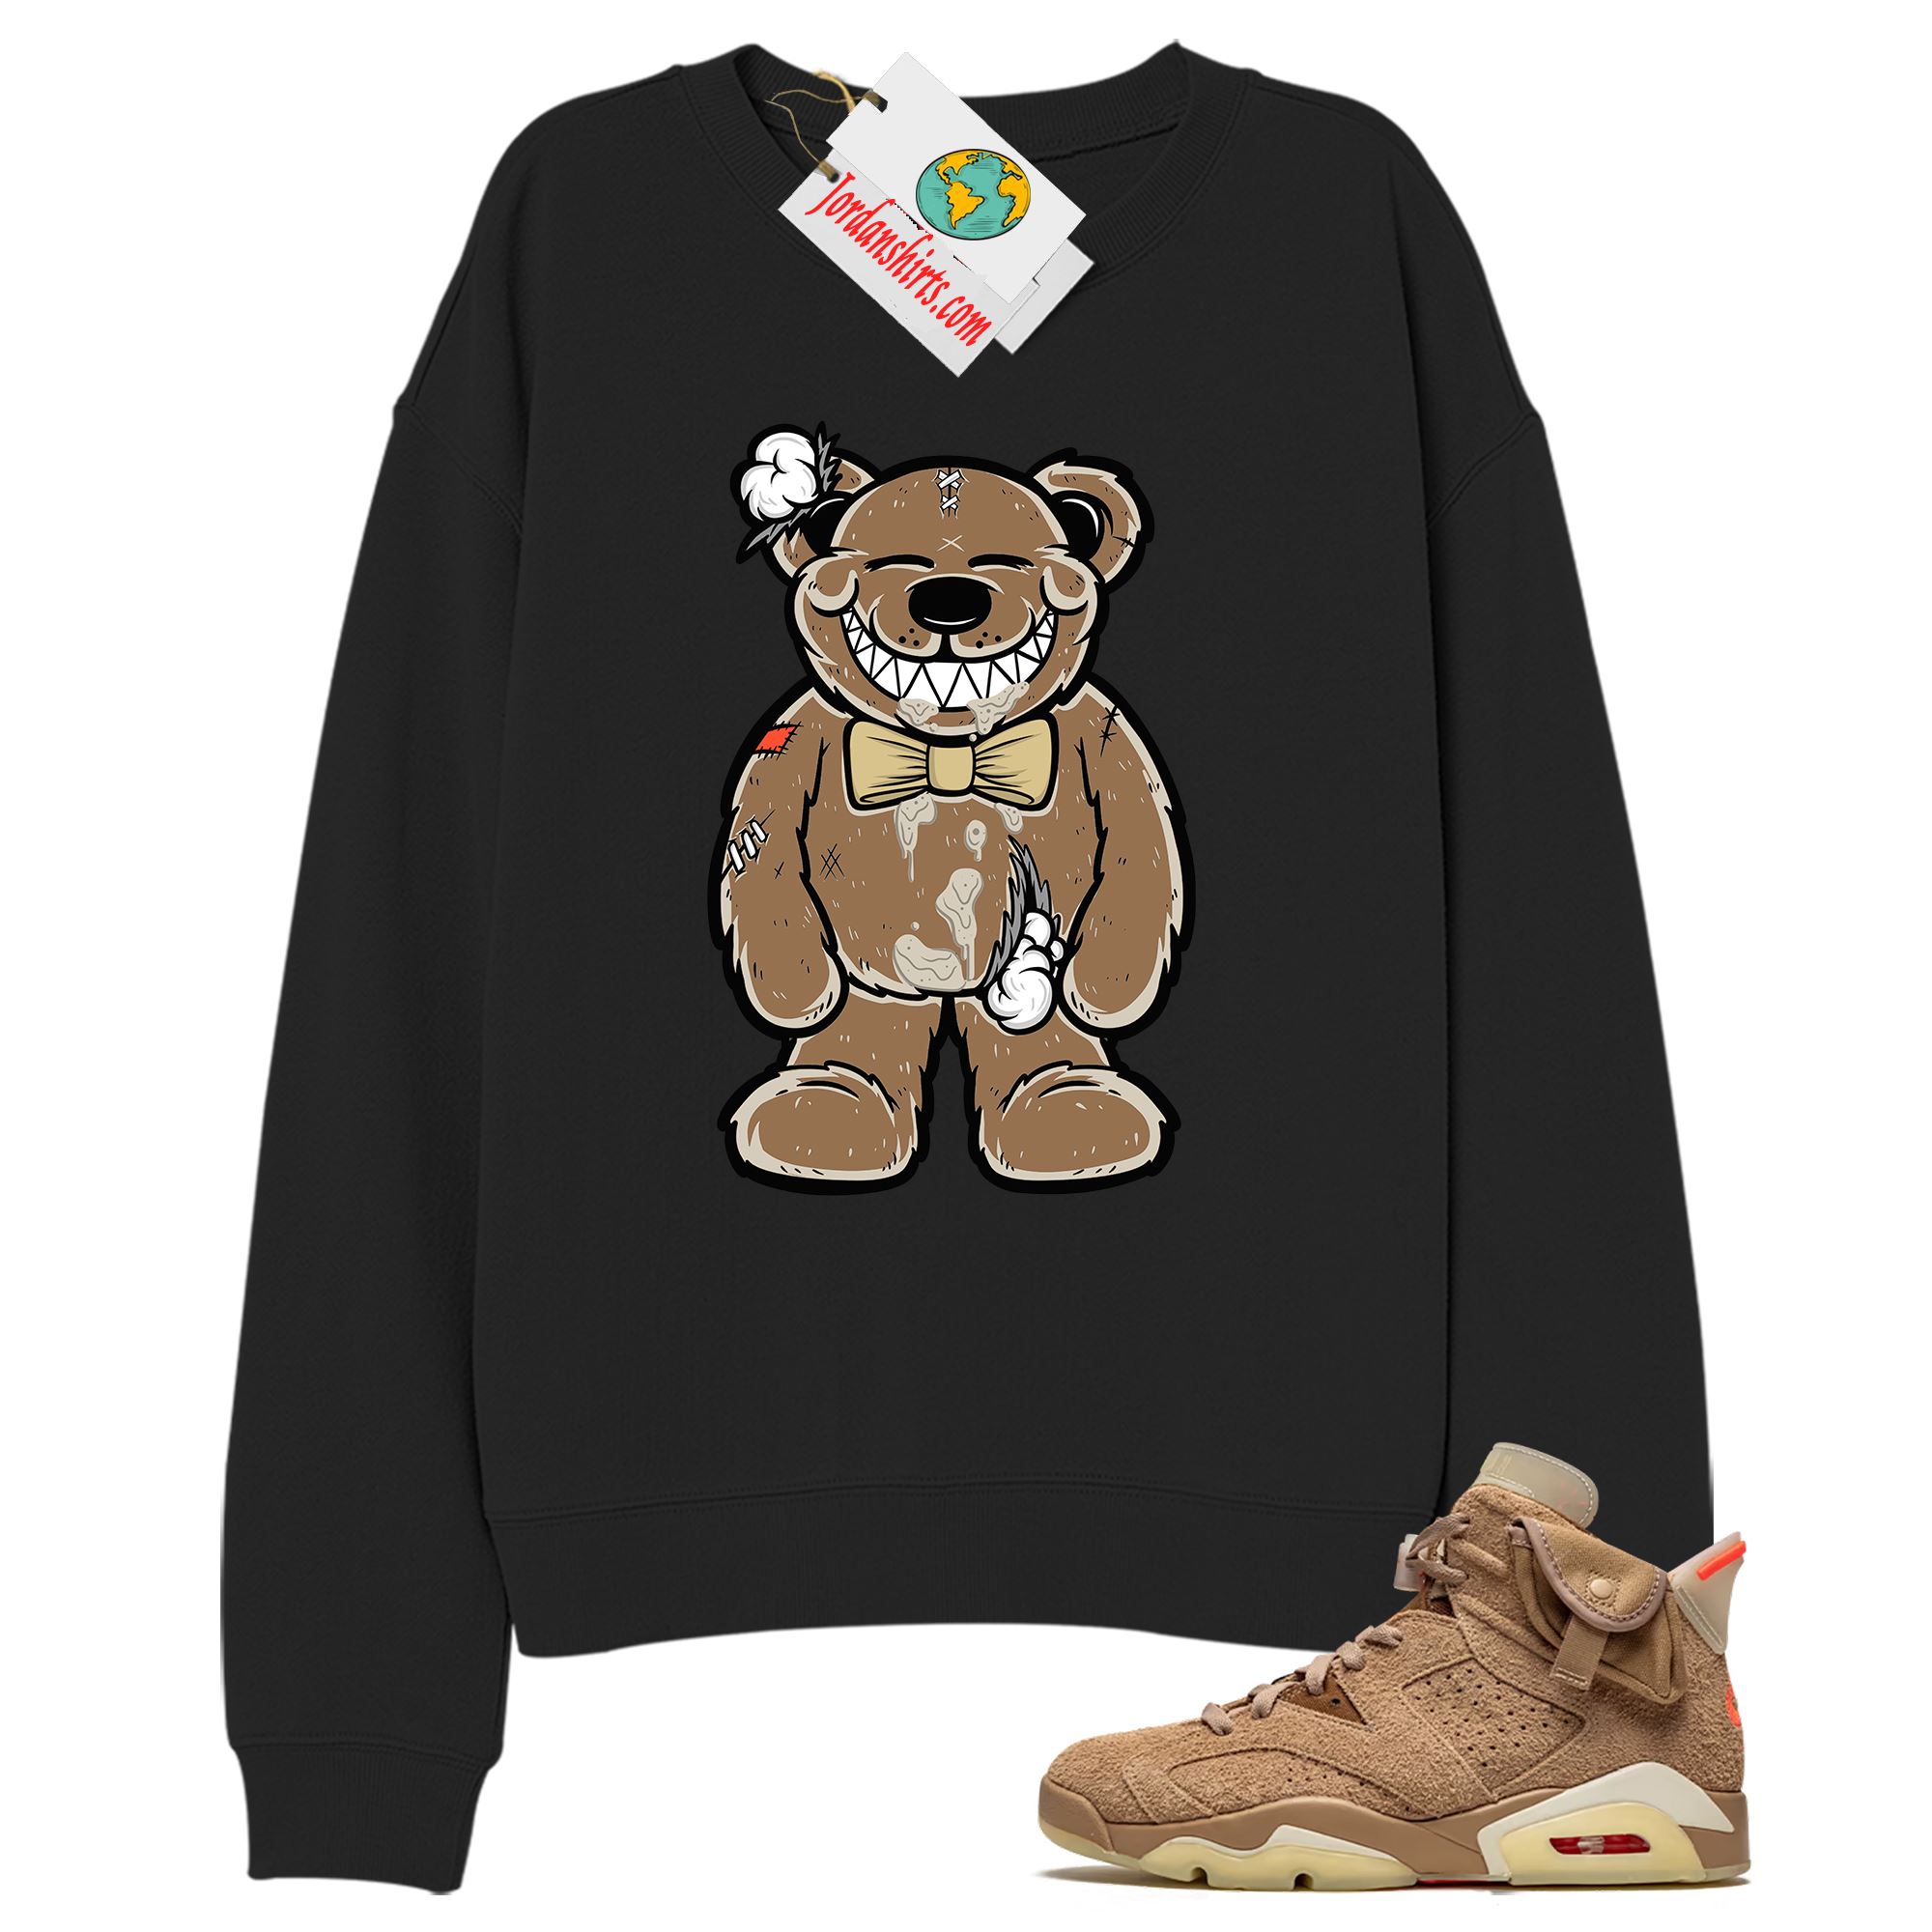 Jordan 6 Sweatshirt, Teddy Bear Smile Black Sweatshirt Air Jordan 6 Travis Scott 6s Plus Size Up To 5xl